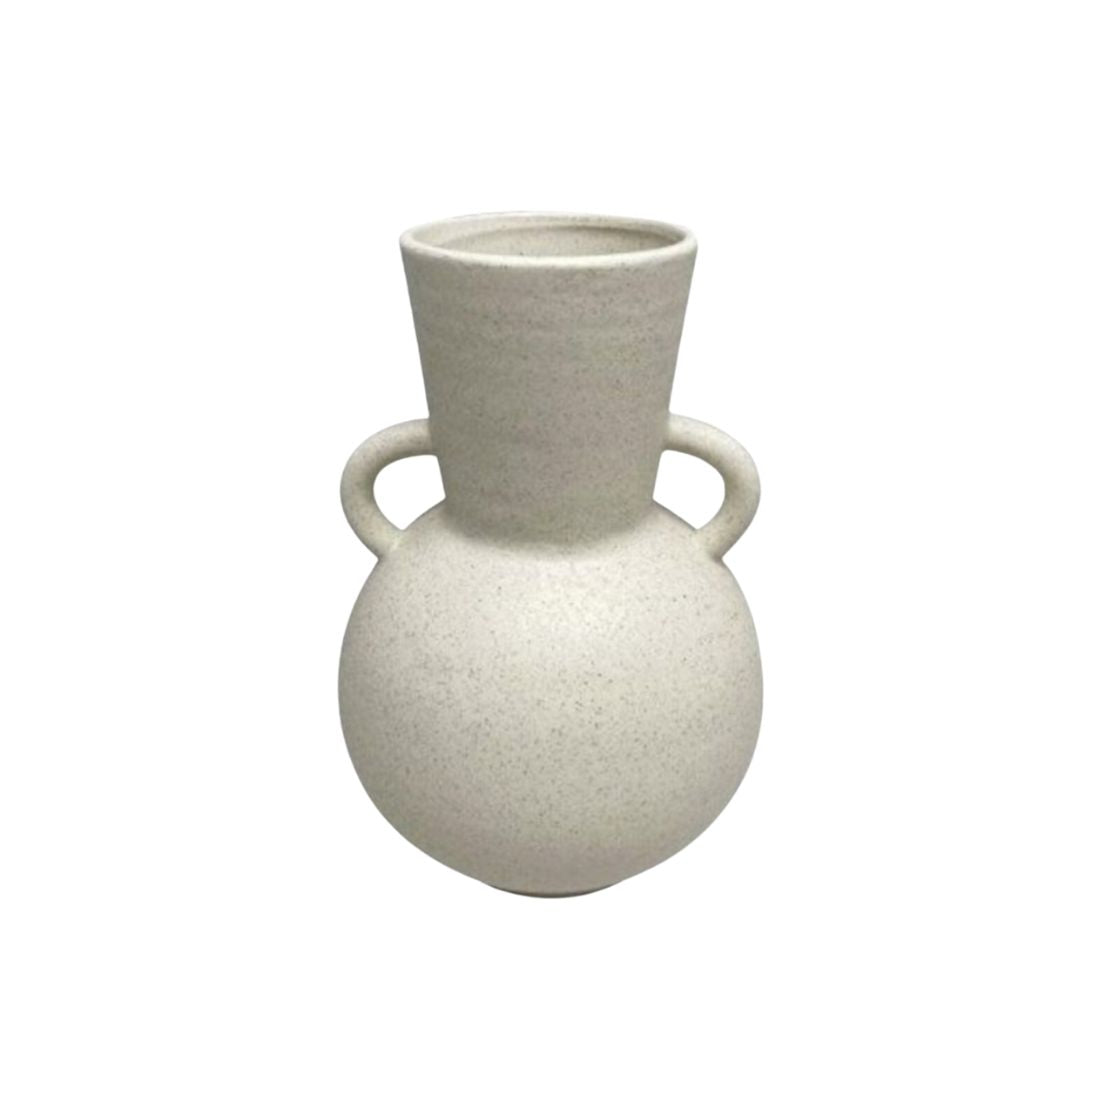 Ceramic Vase With Side Handles